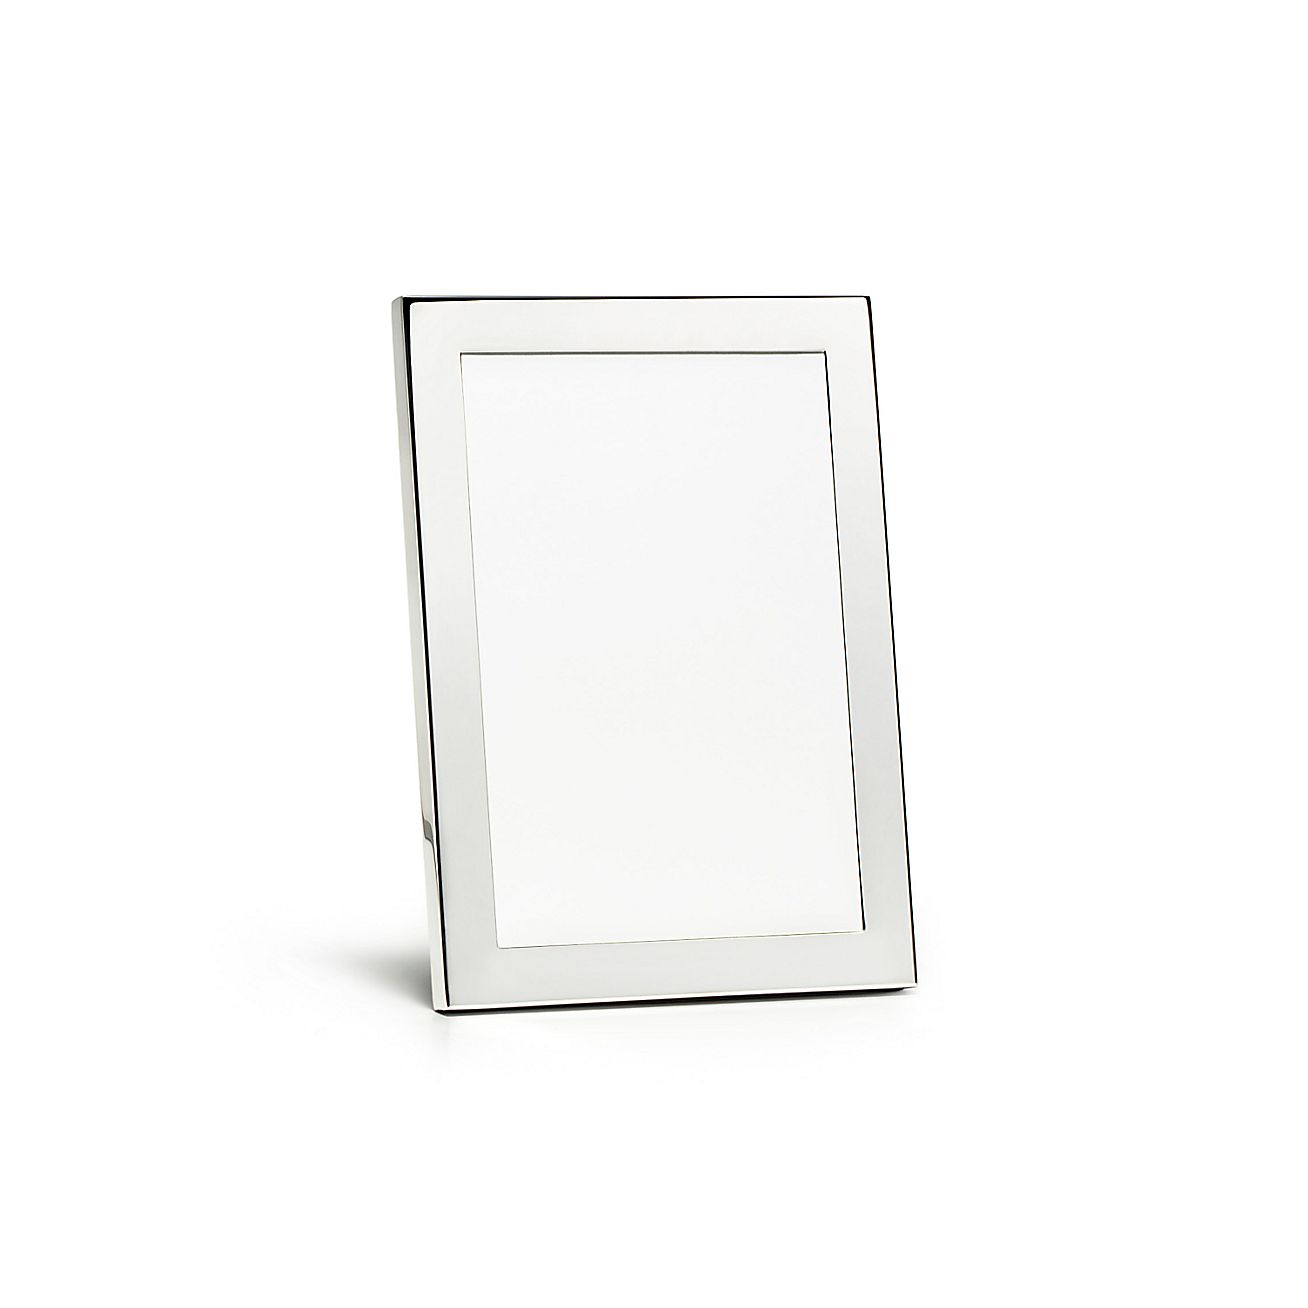 Square Frame in Sterling Silver, Size: 3.5 x 3.5 in.